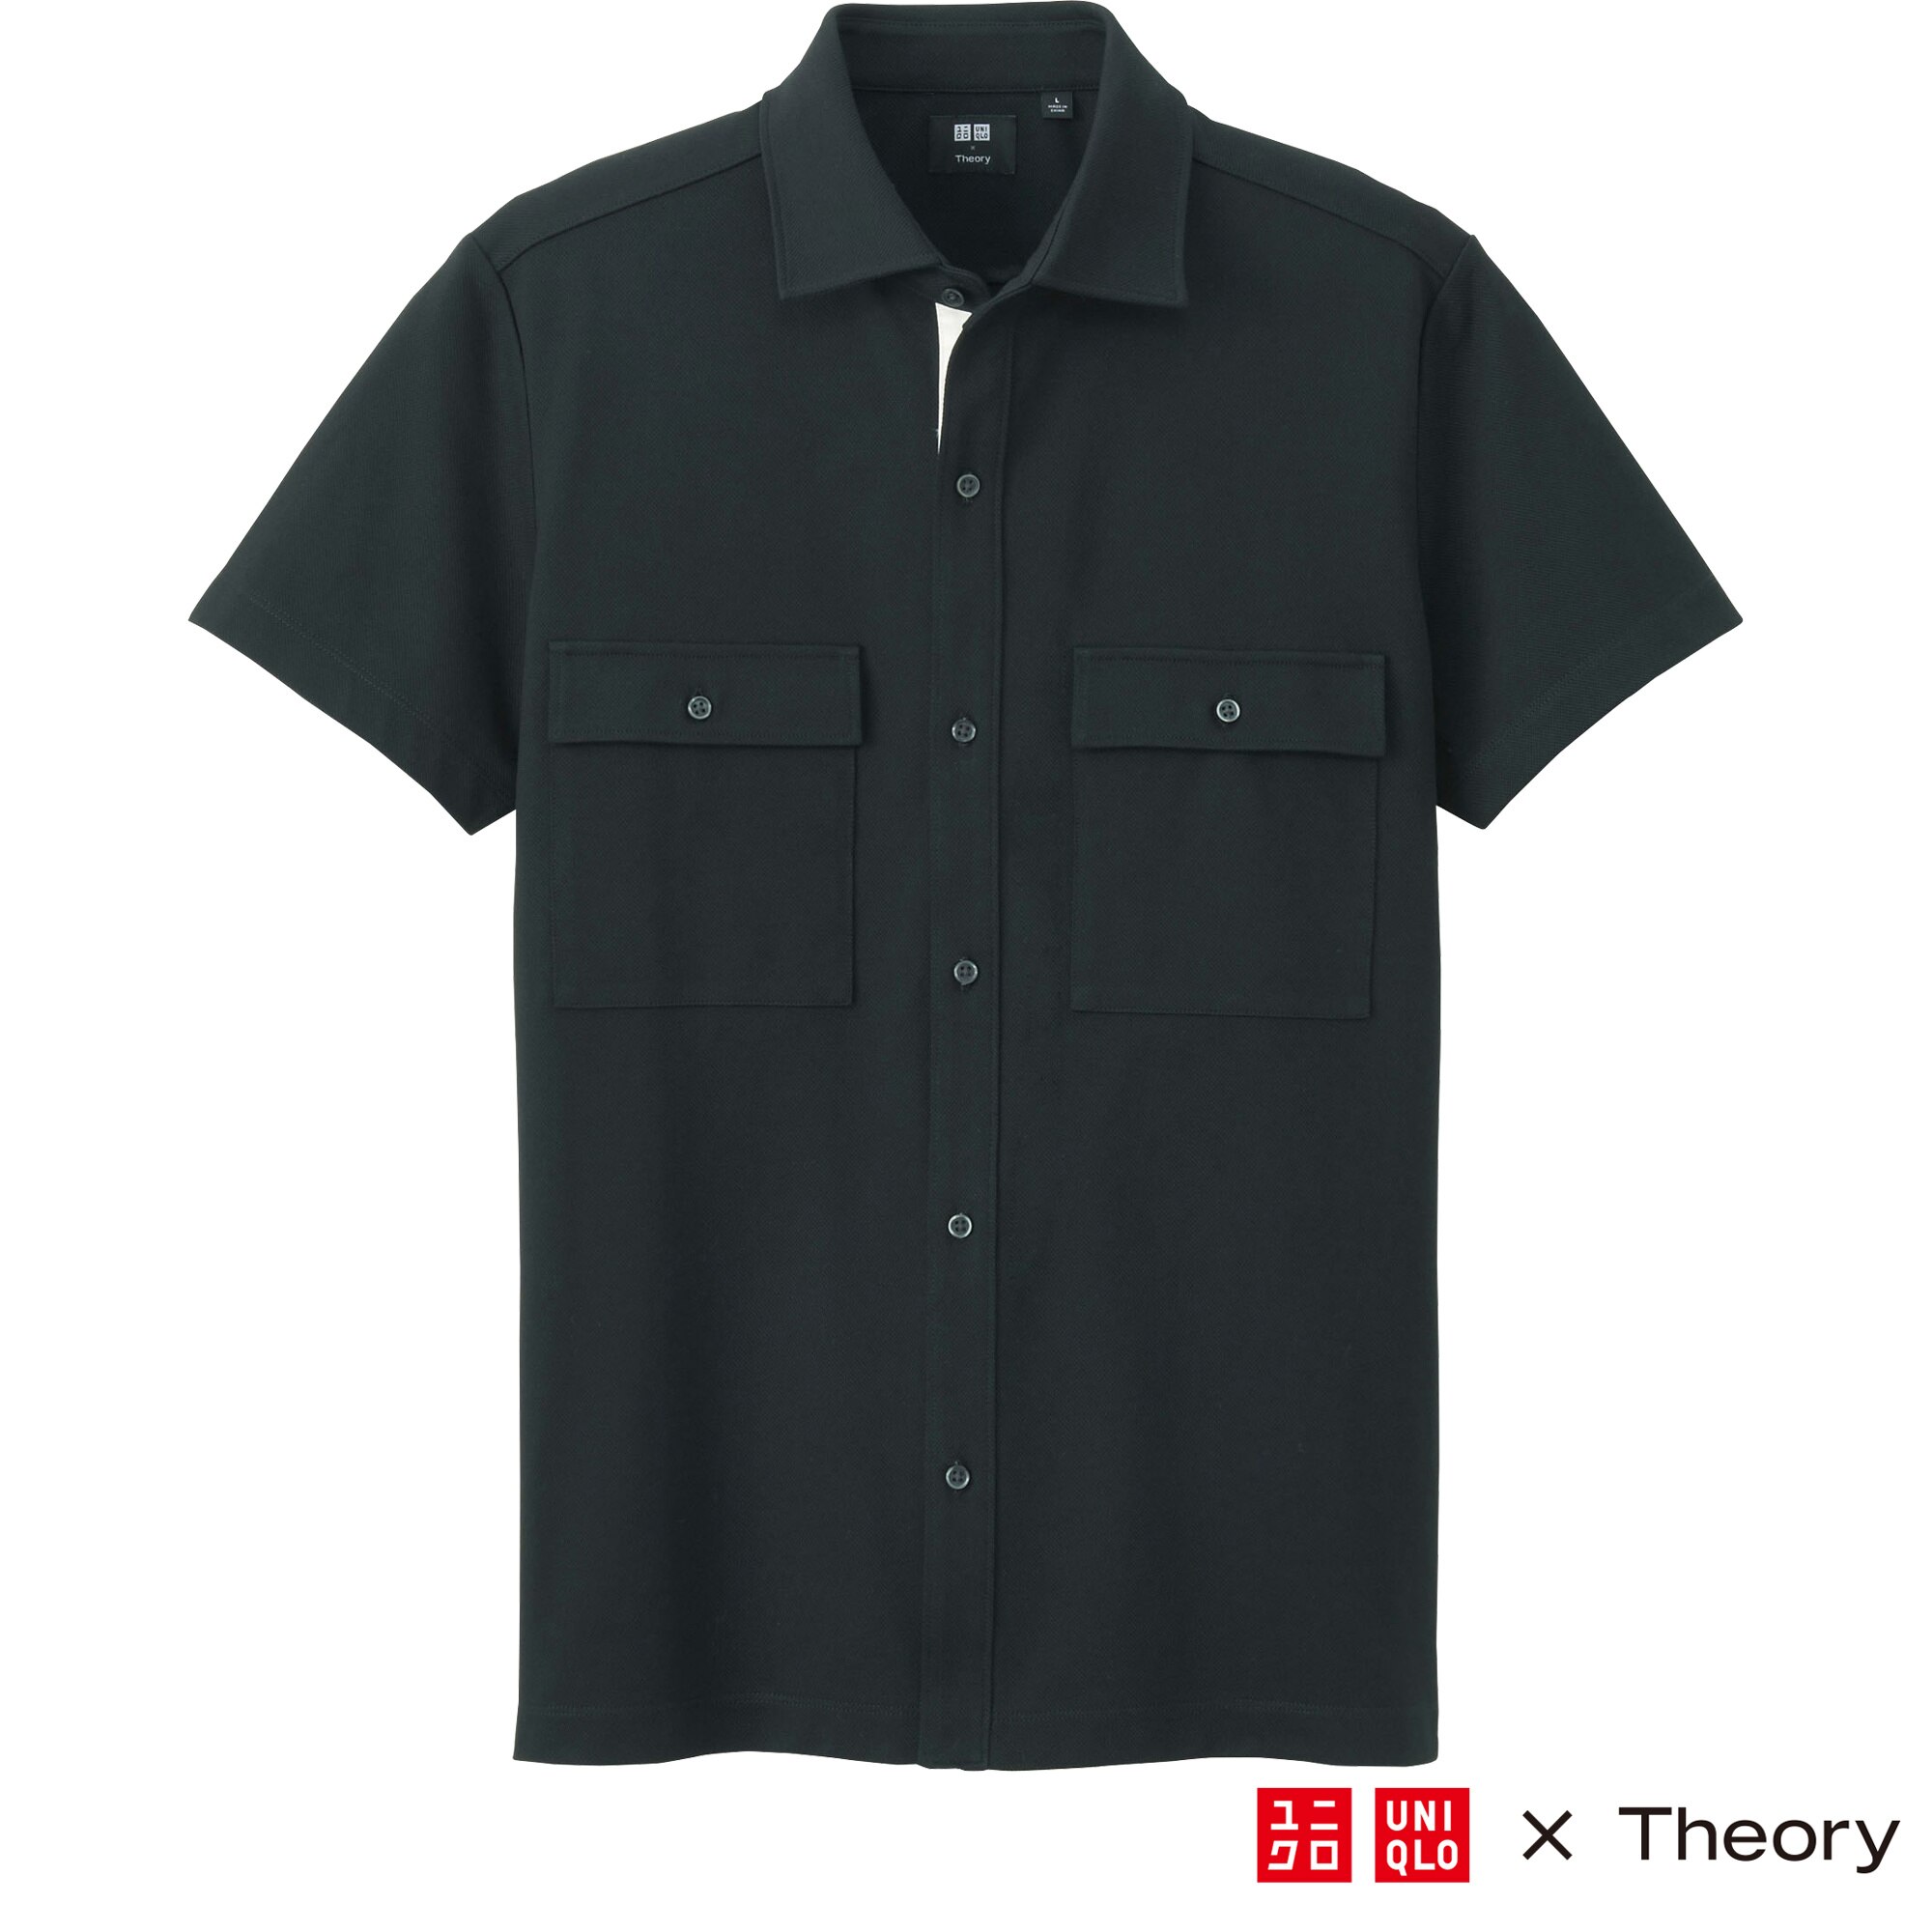 polo black button down shirt